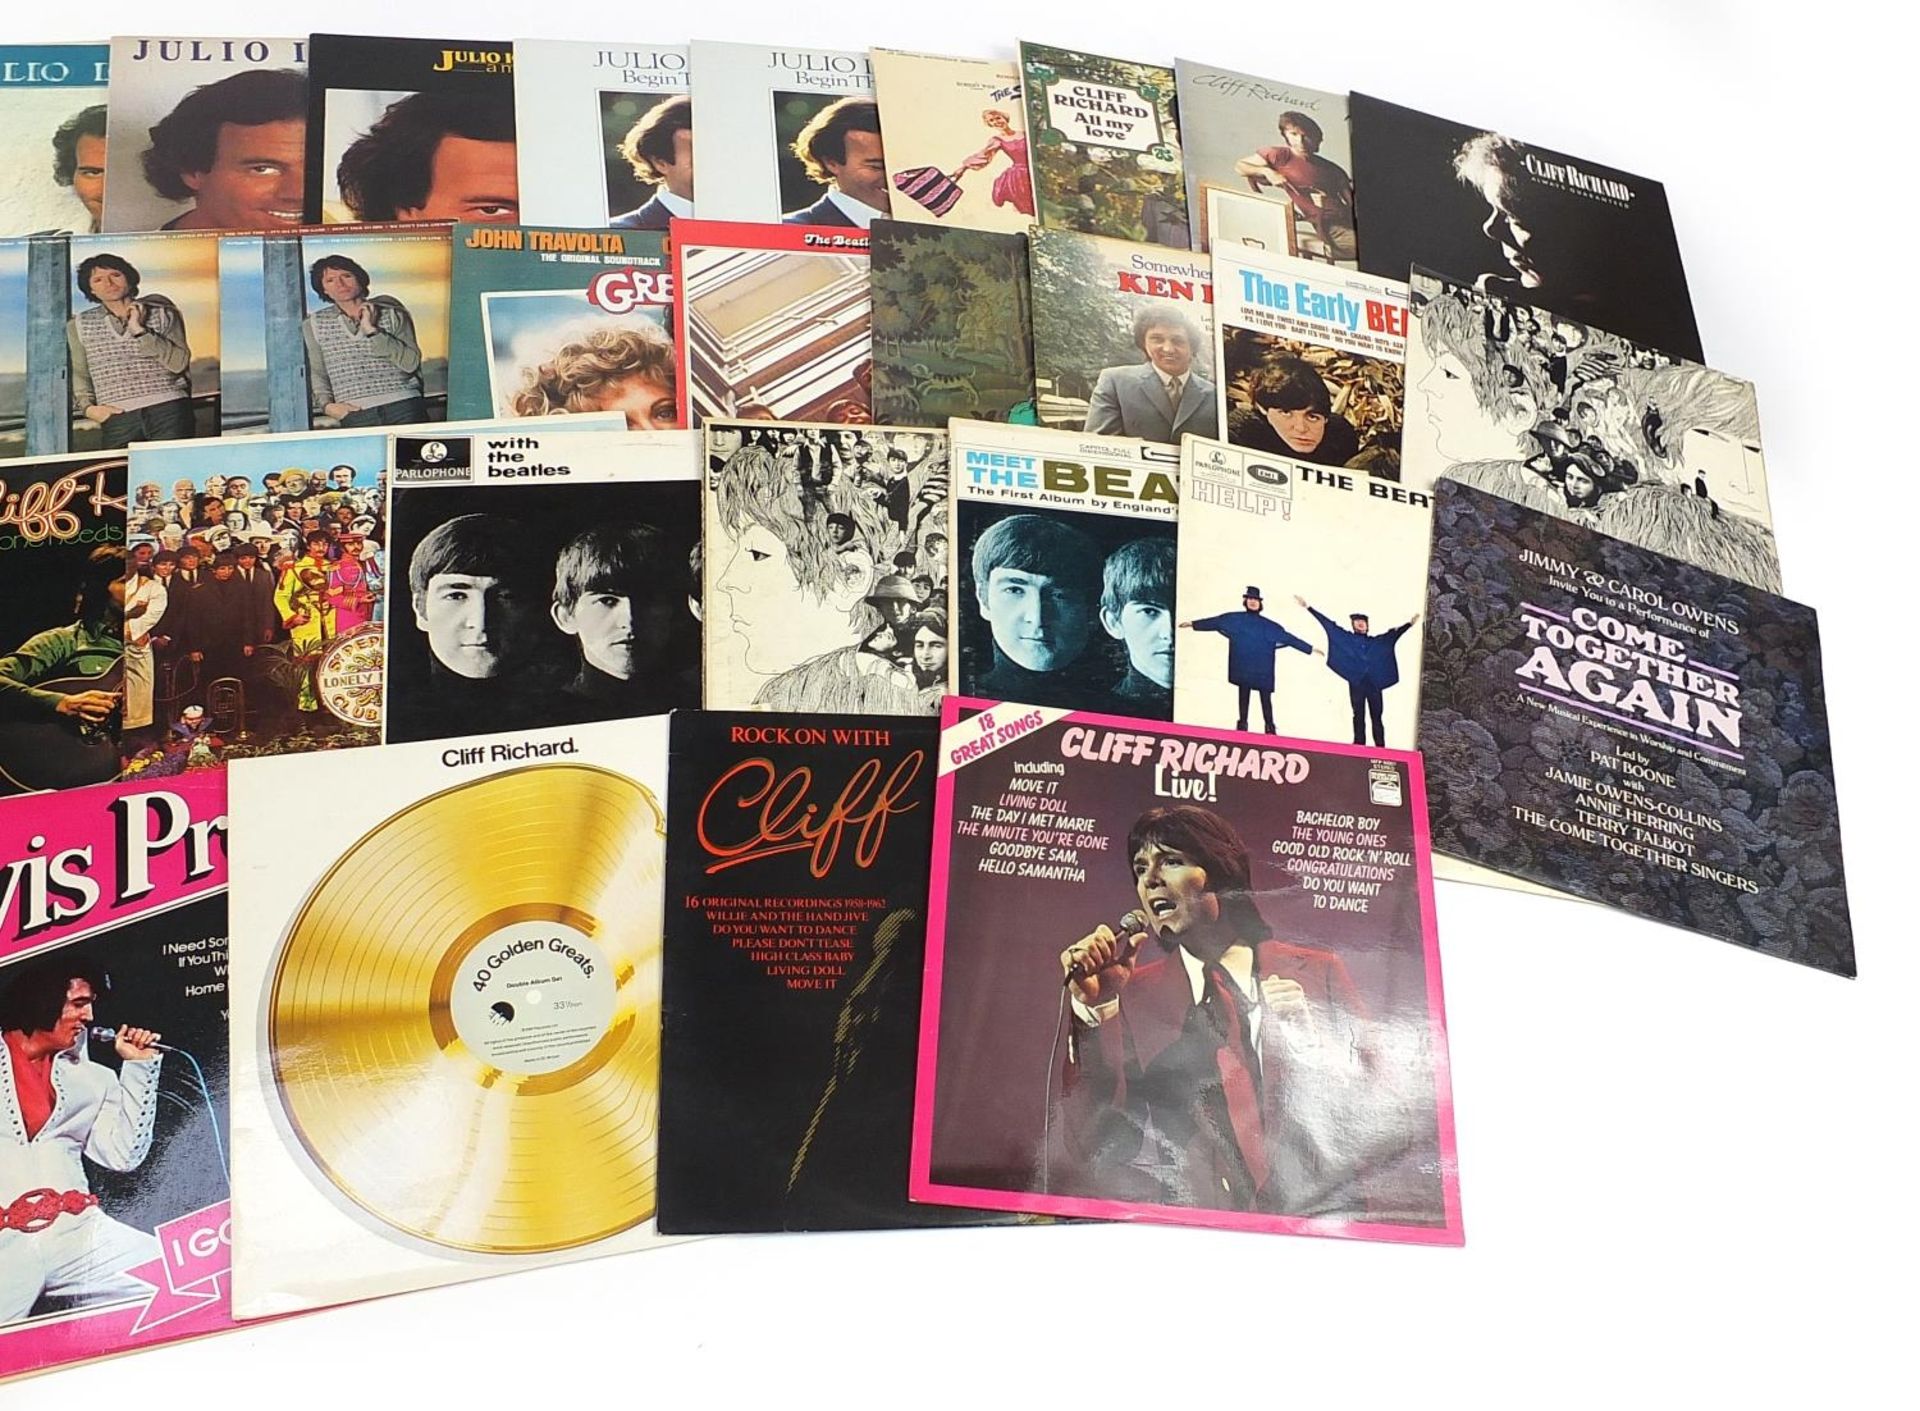 Vinyl LP records including The Beatles, Elvis Presley, Cliff Richard and Tom Jones - Image 3 of 3